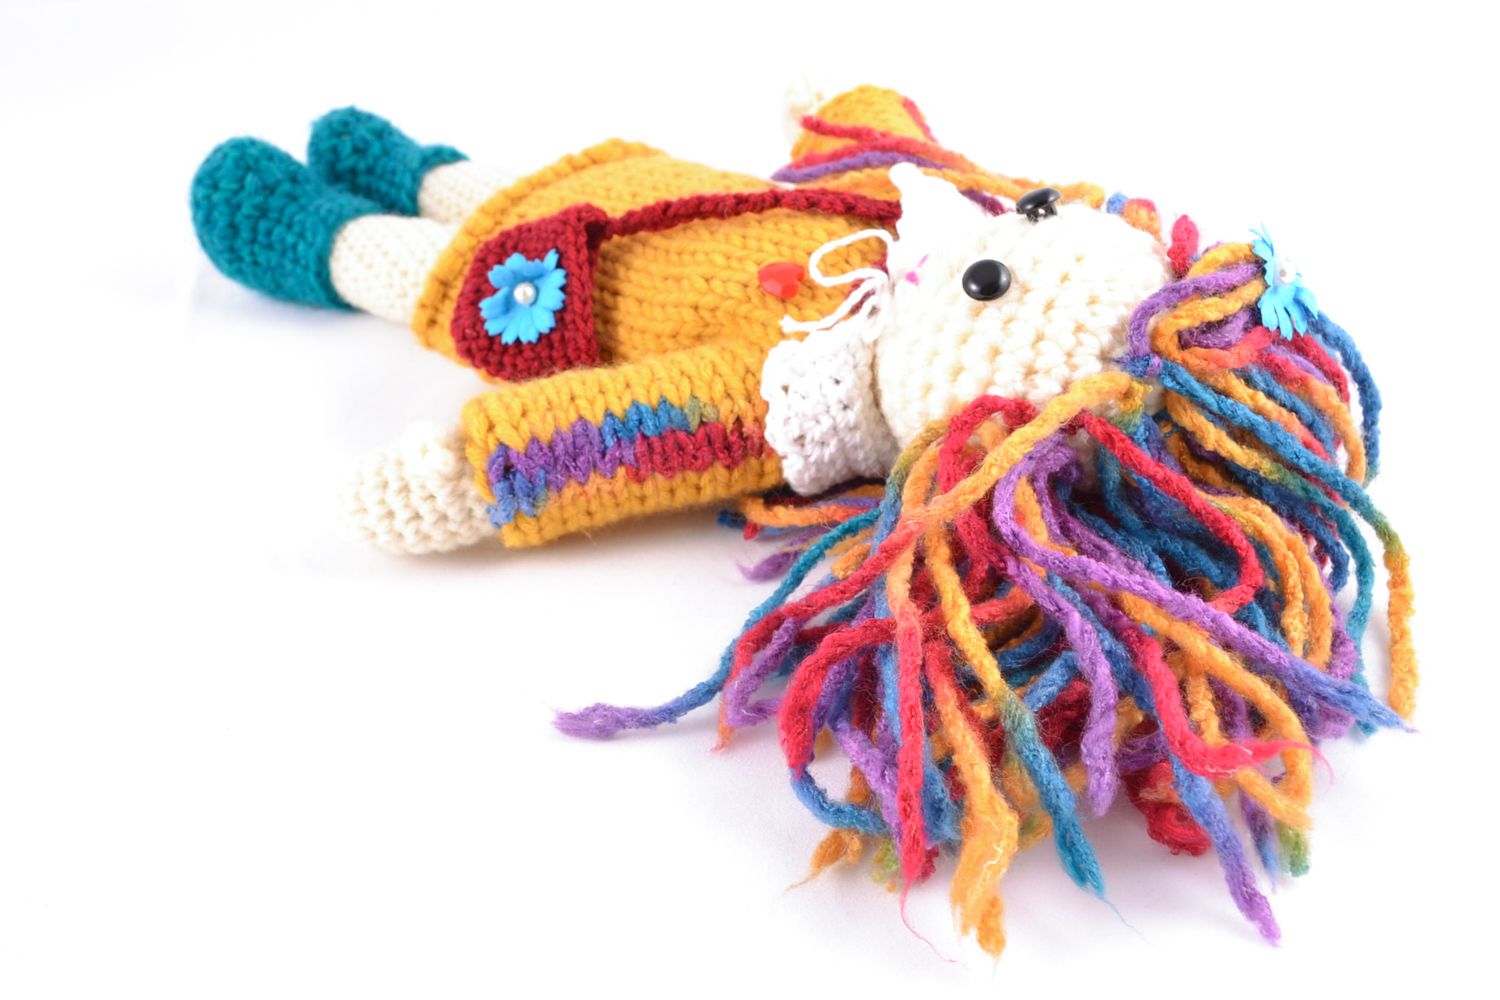 Handmade crochet doll photo 3